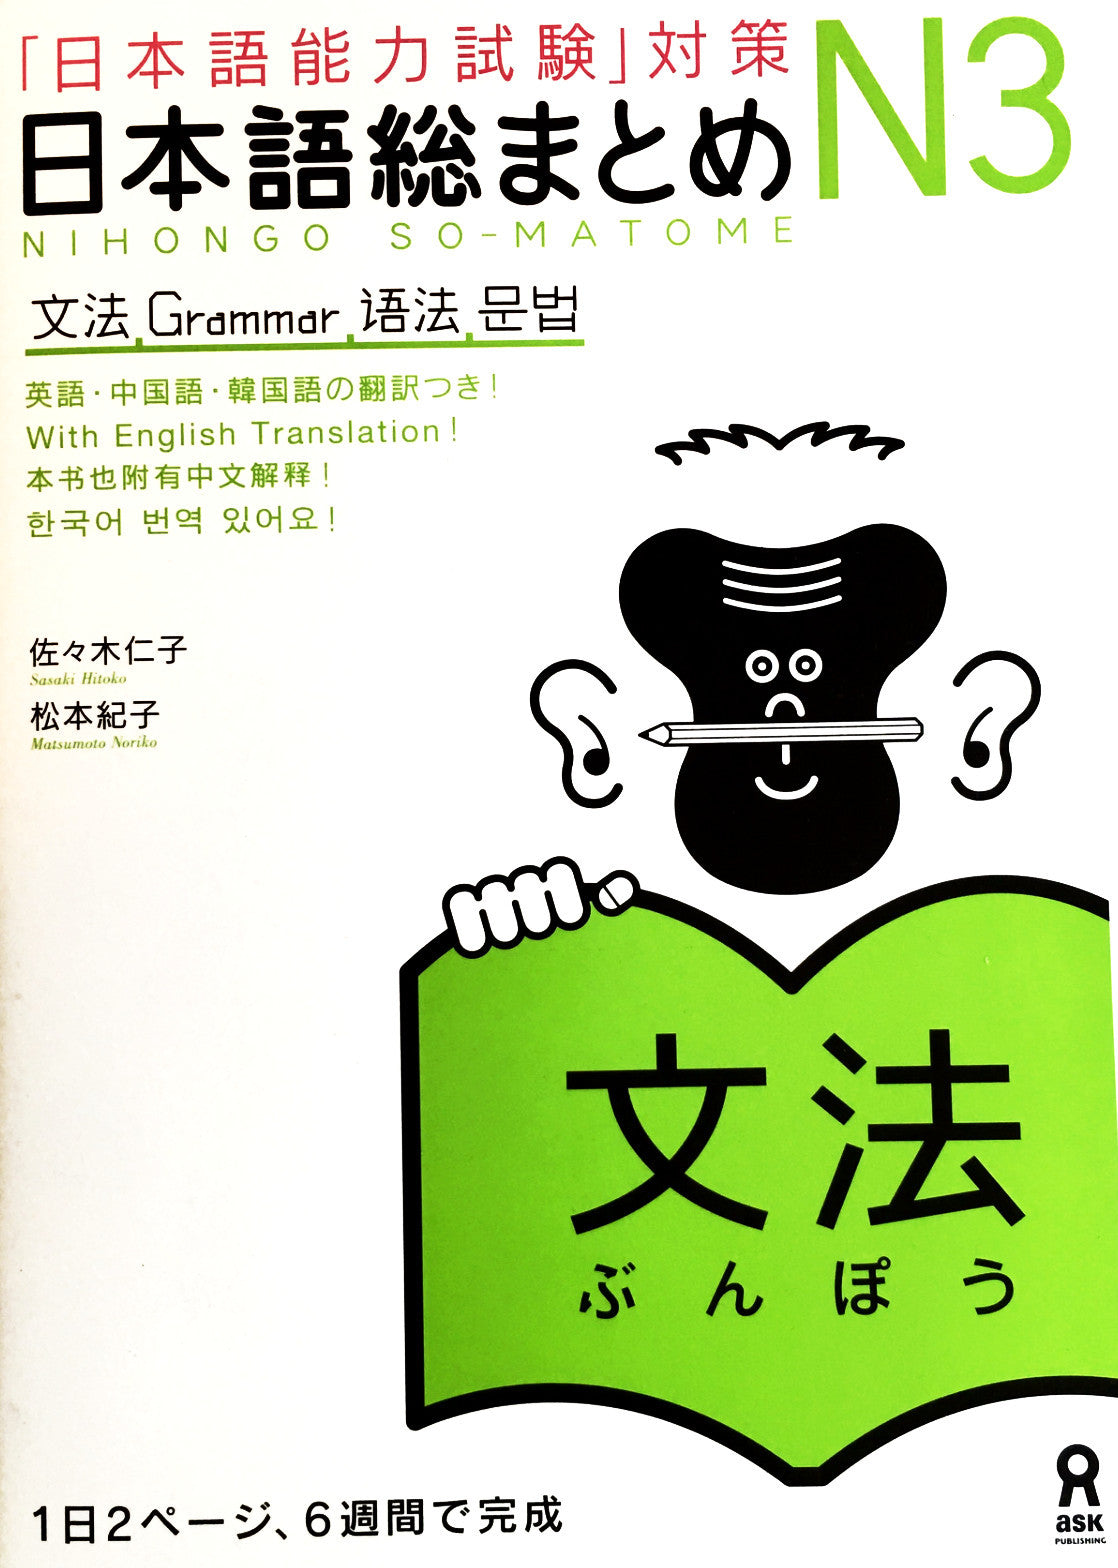 Nihongo So-matome N3 Grammar - The Japan Shop